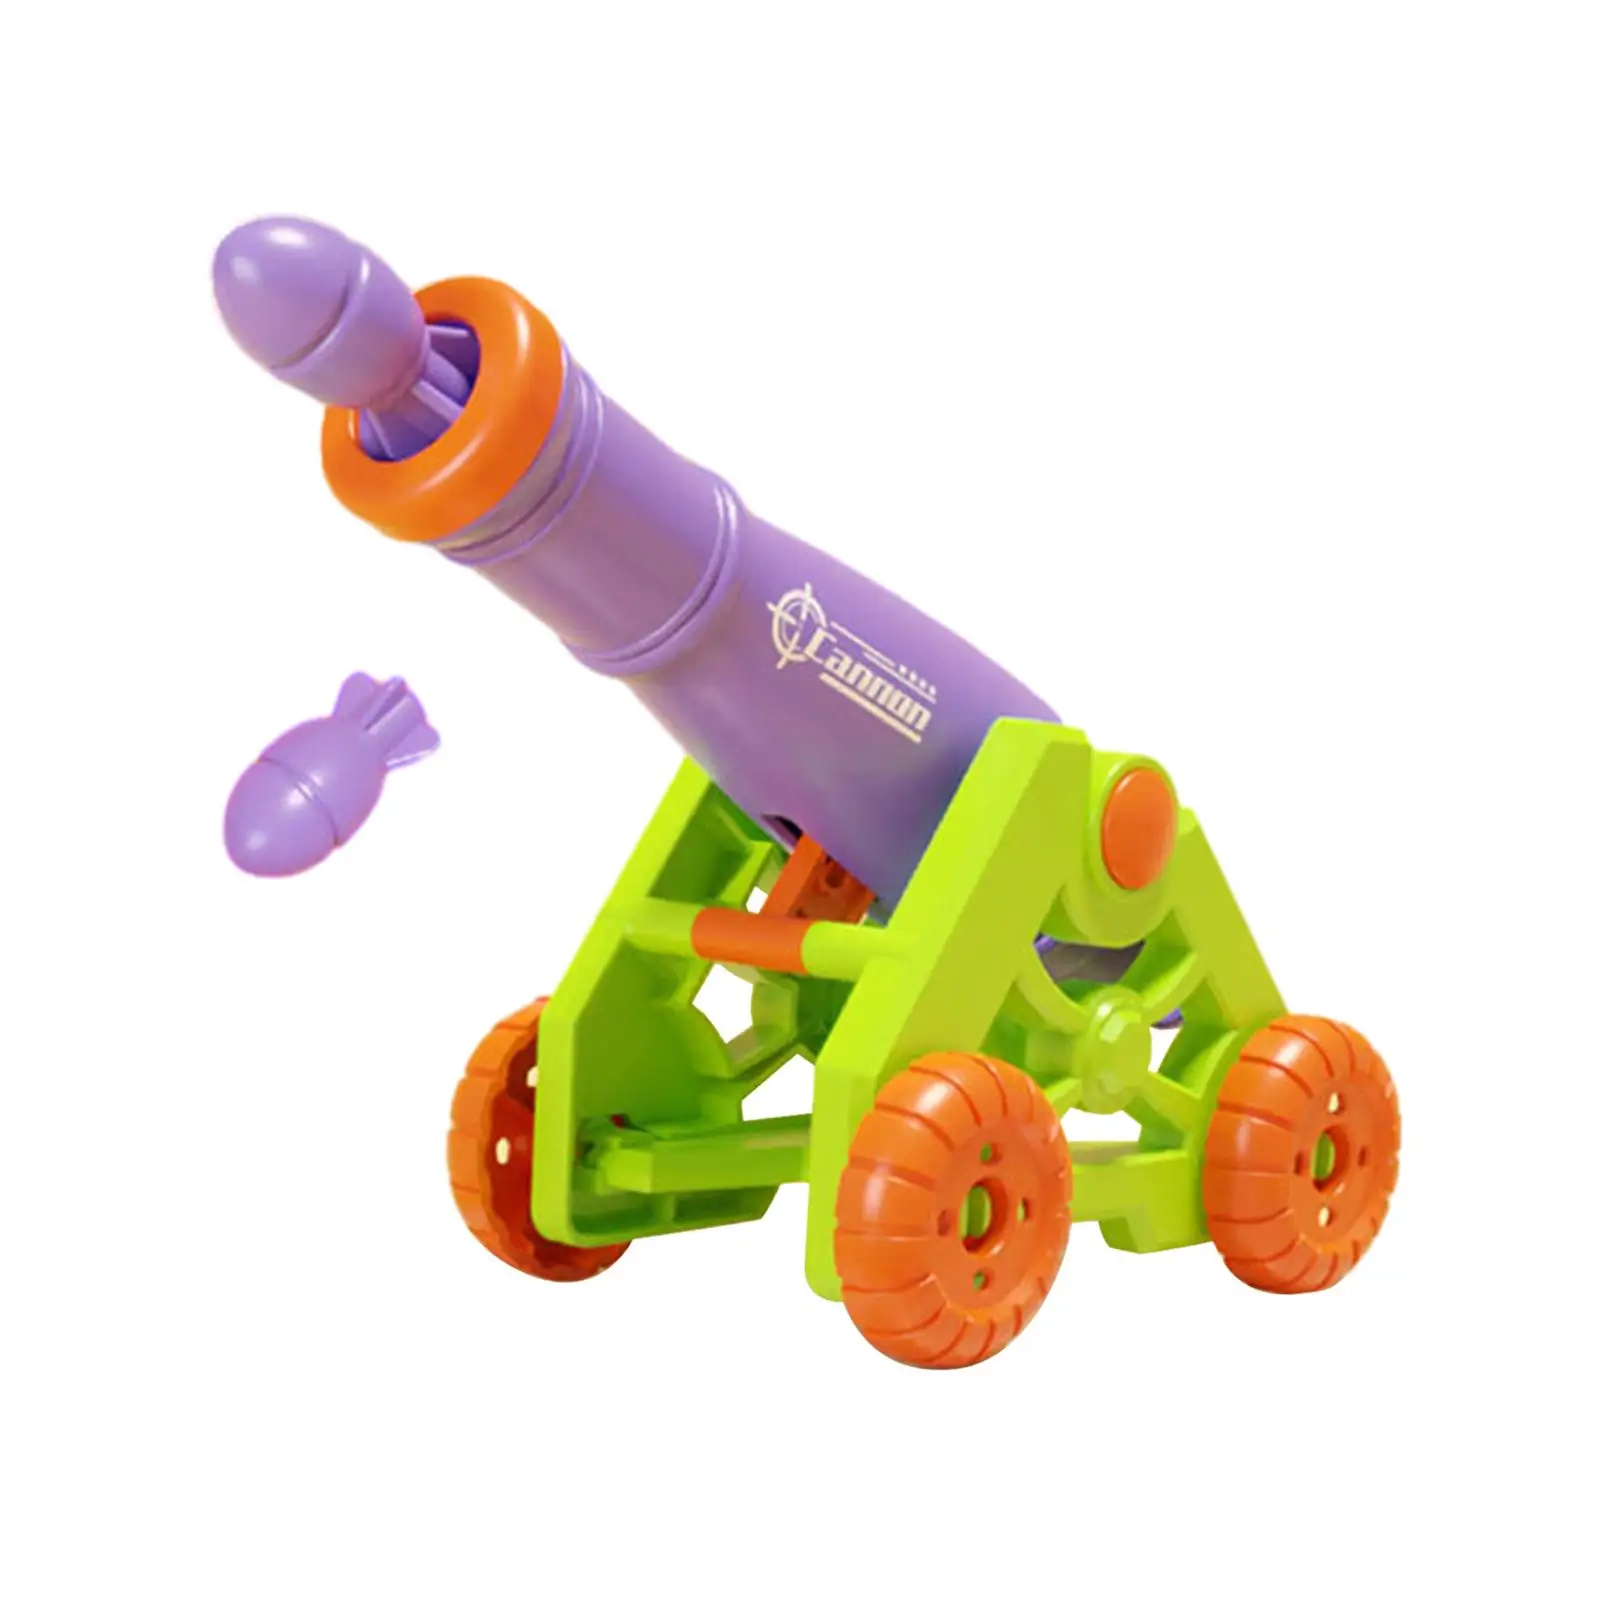 Mini Radish 3D Printing Gravity Decompression Sensory Toy 3D Printed Radish for Girls Boys Kids Adults Teens Birthday Gifts